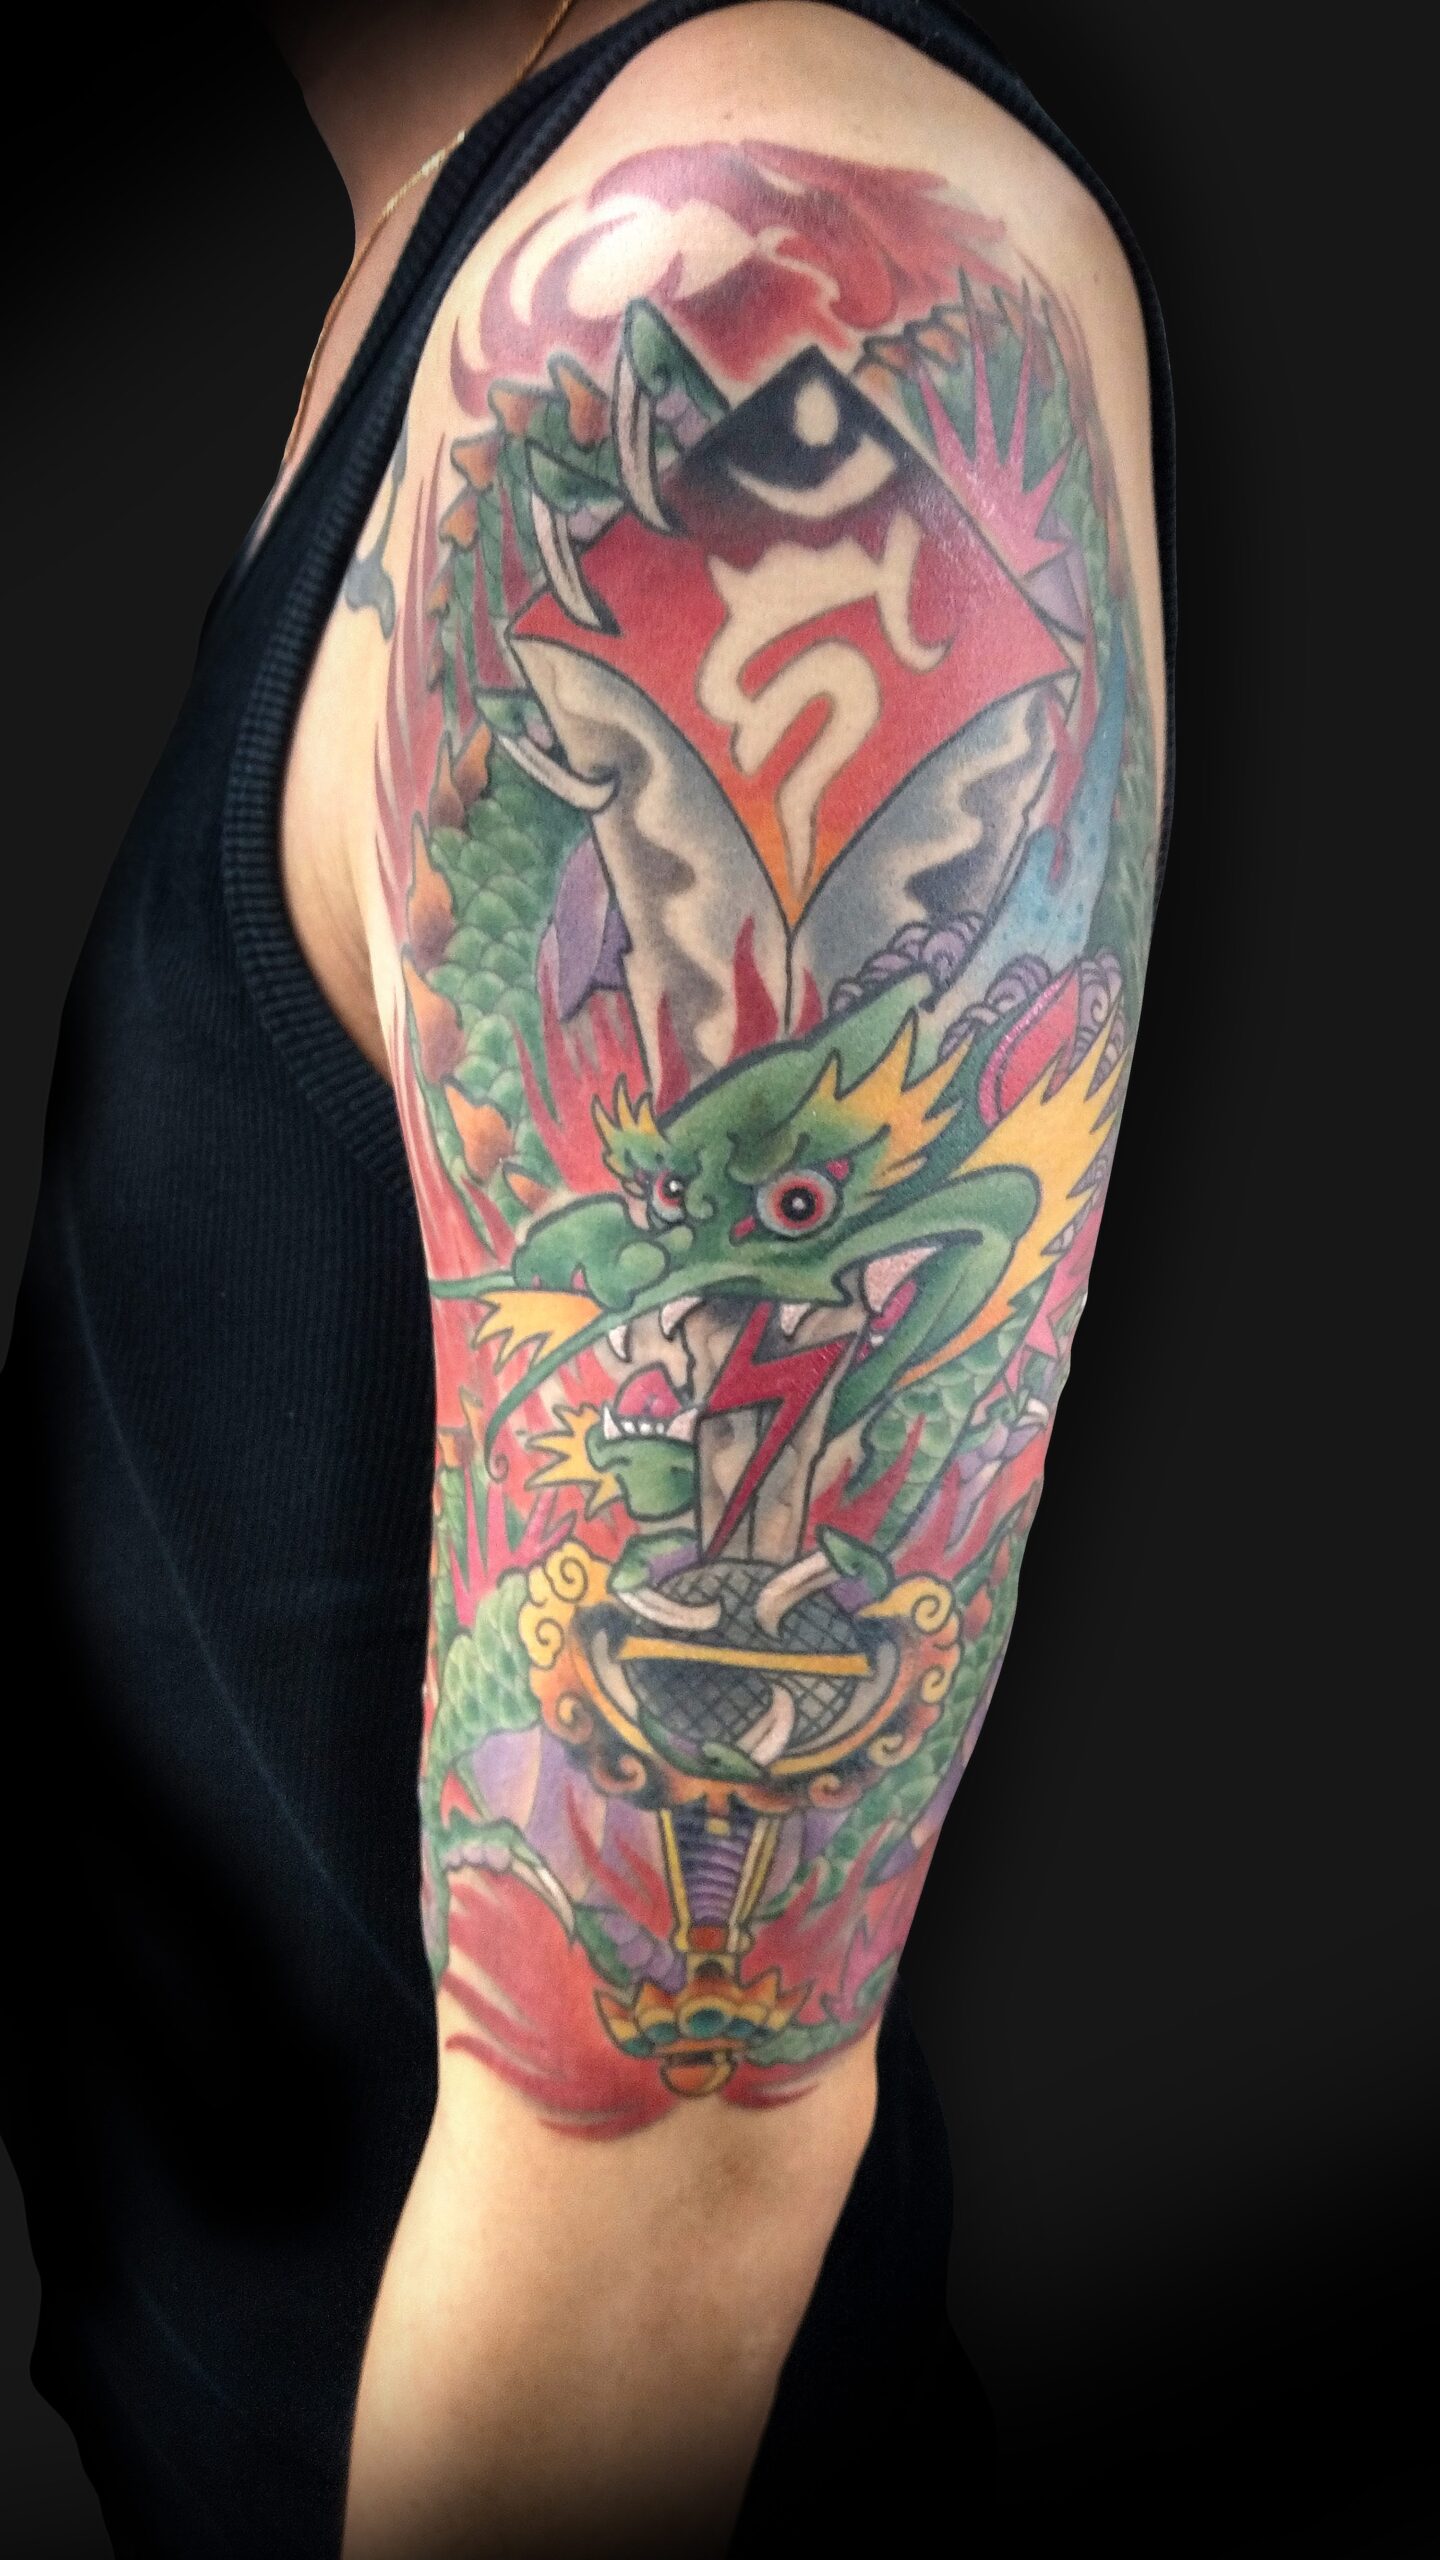 KING RAT TATTOO 作品 | LAVA gallery | Tattoo artist: Yuji Anai | キングラット | ラバギャラリー | タトゥーアート | 福岡県北九州市 | shoulder03 202107